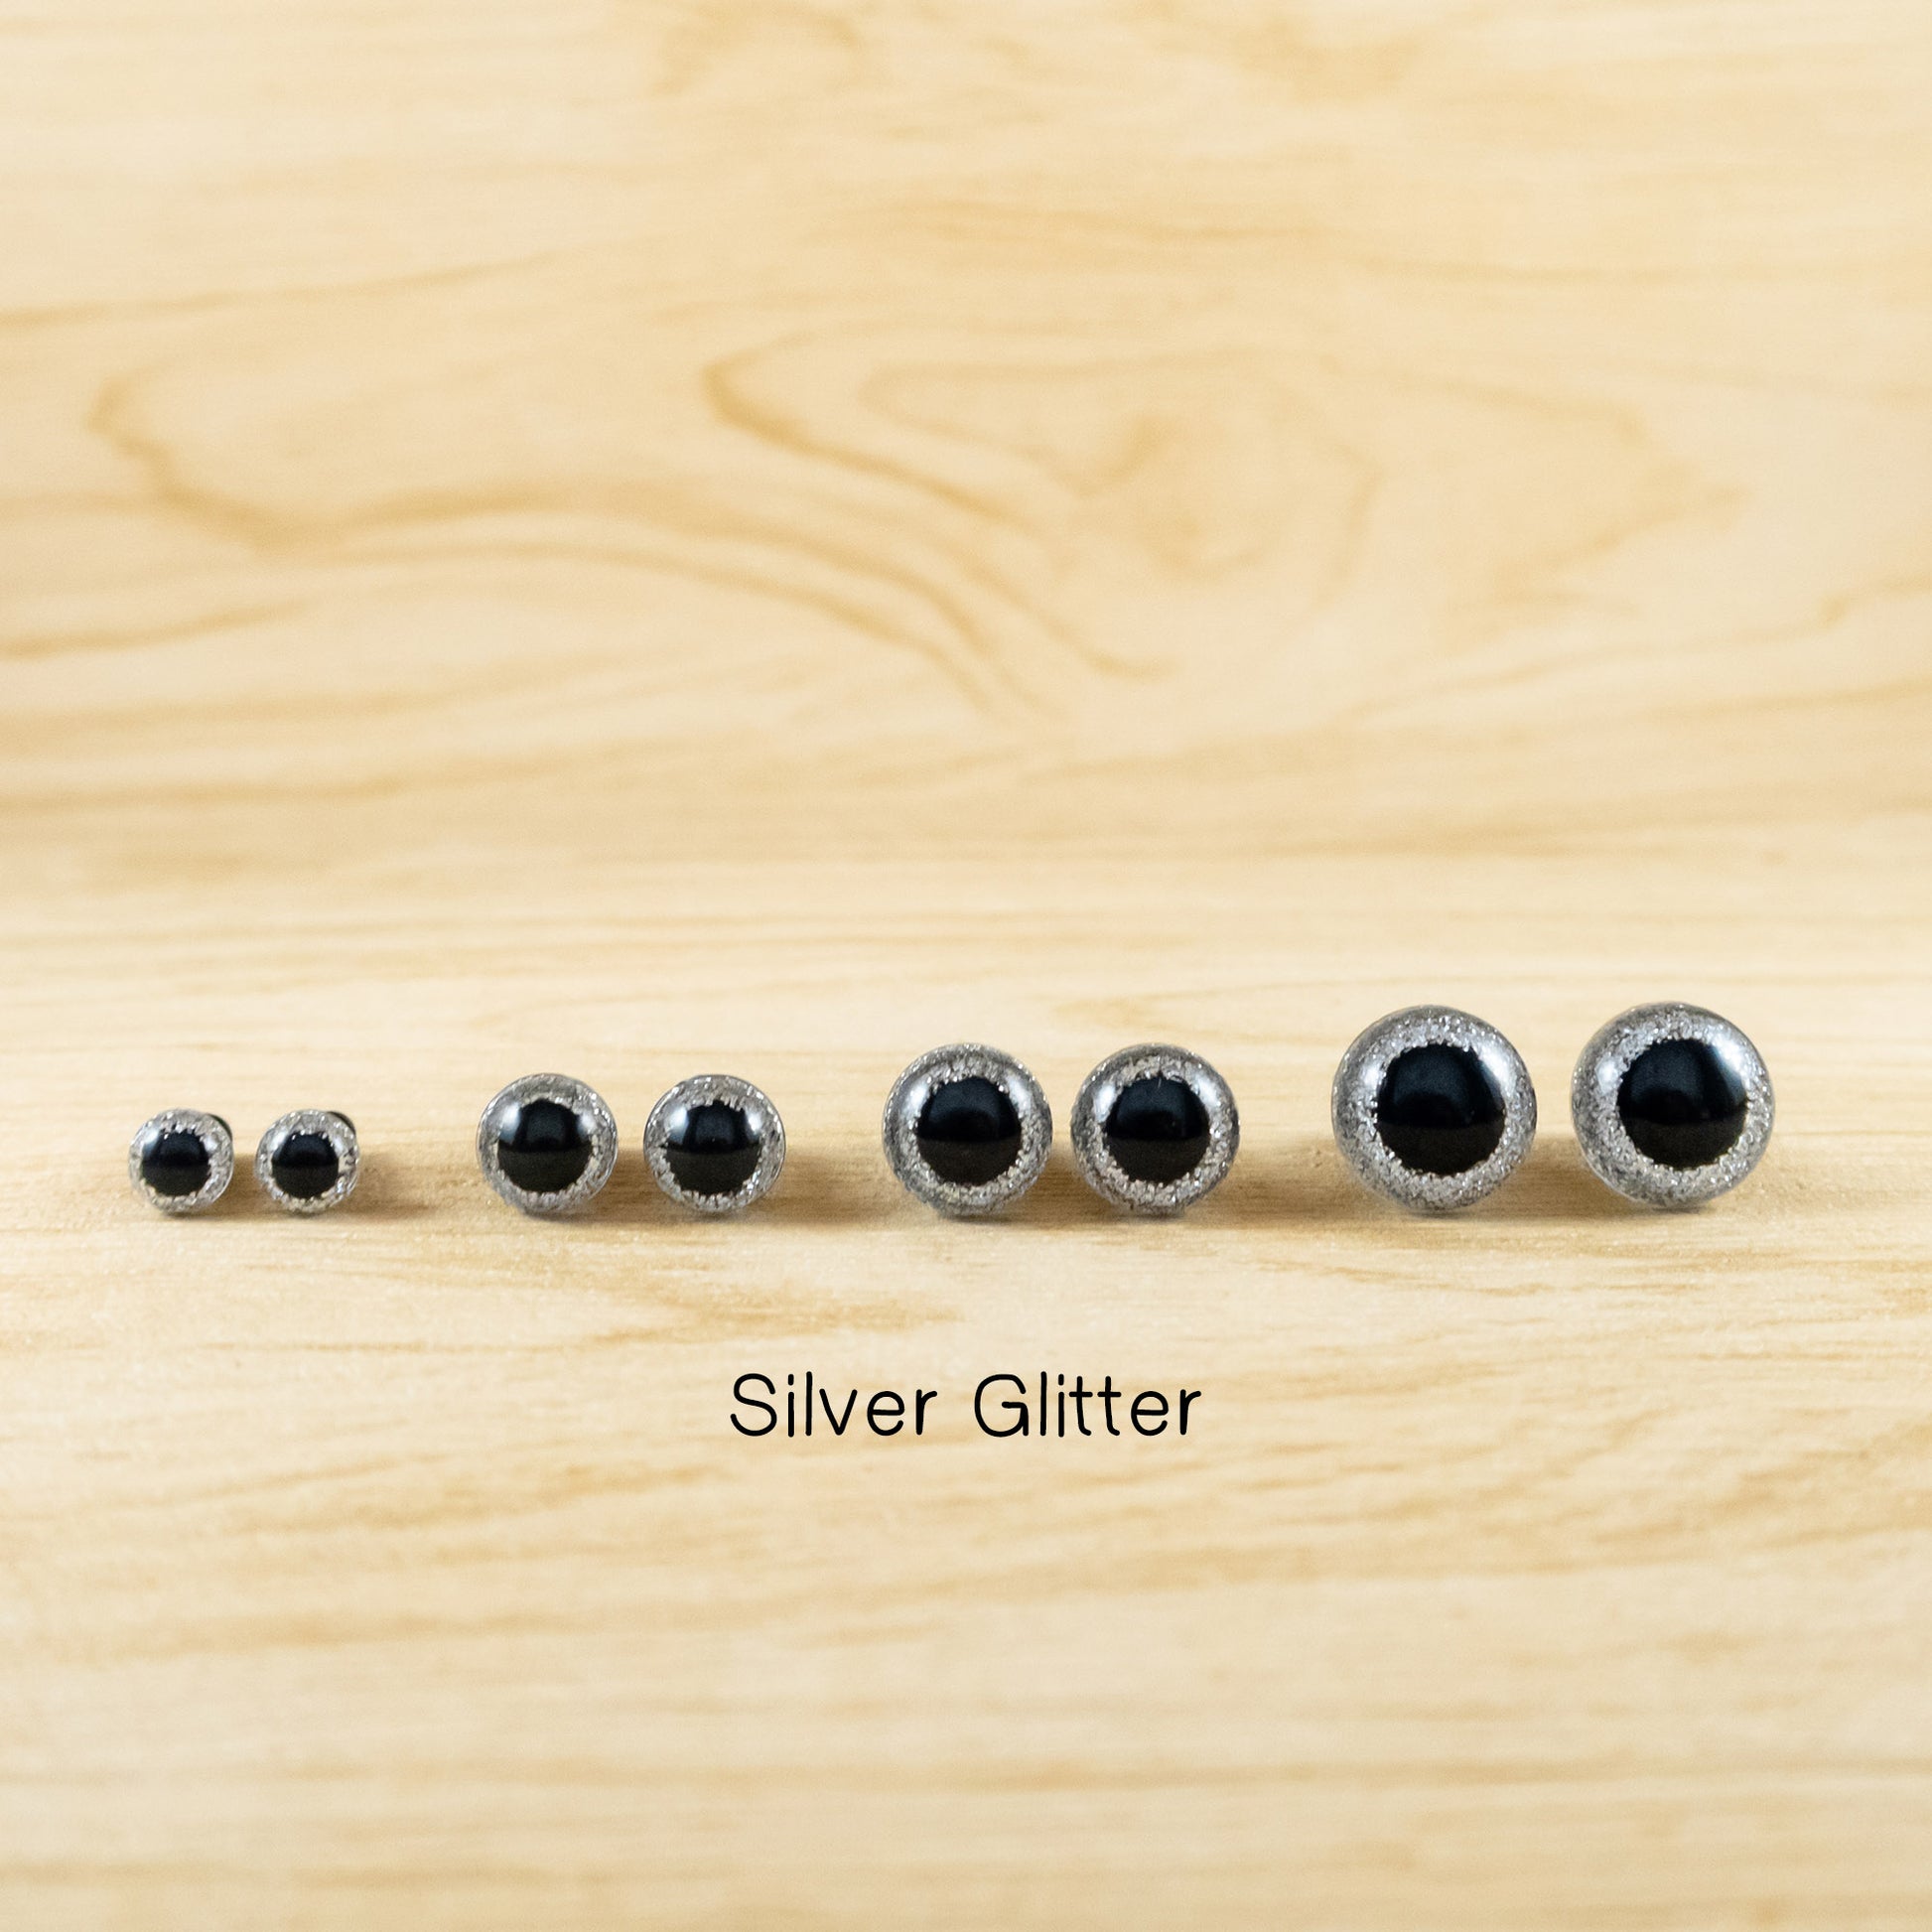 Silver glitter safety eyes for crochet toys